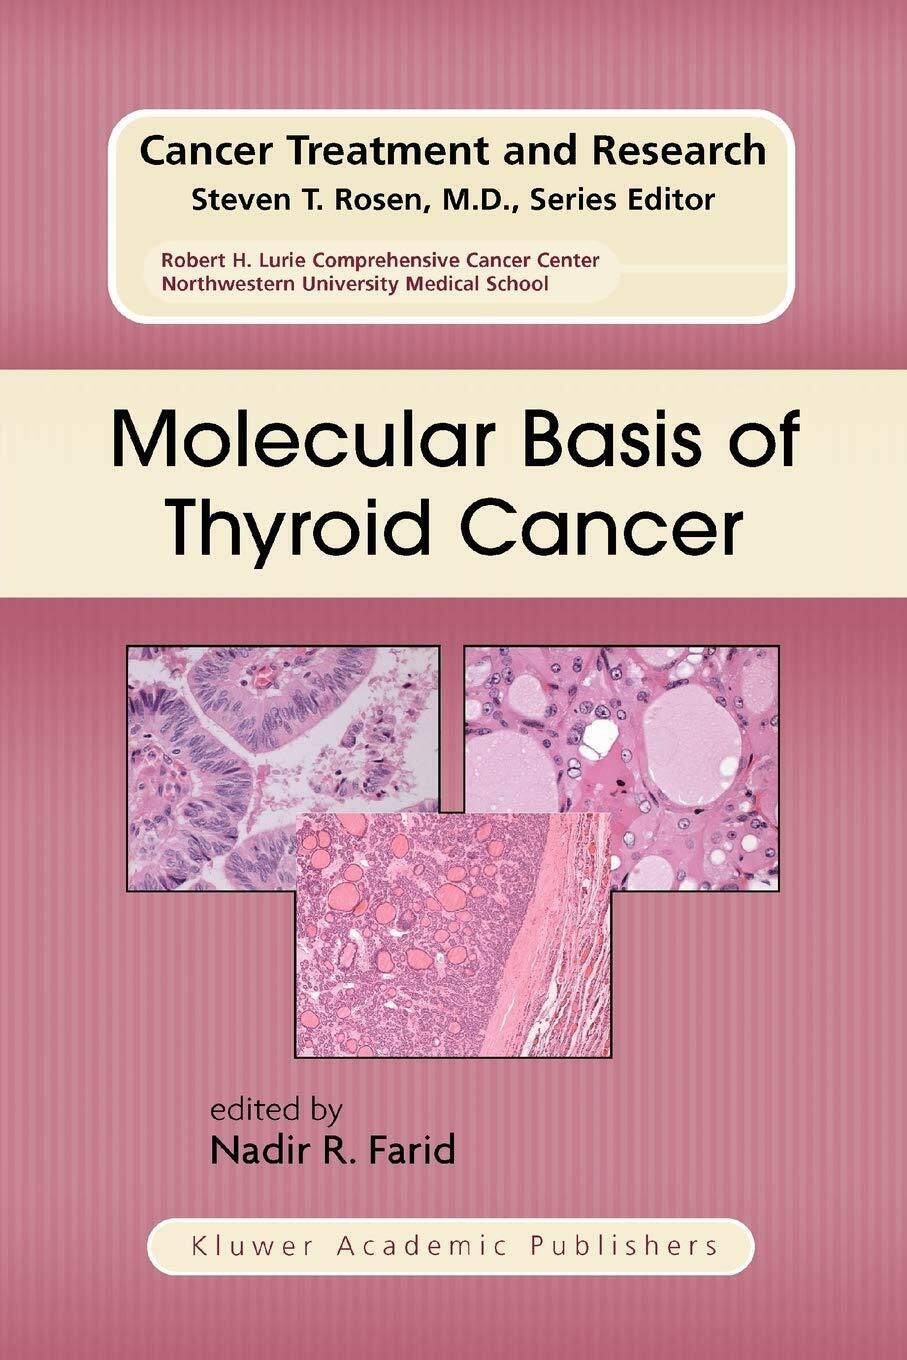 Molecular Basis of Thyroid Cancer - NADIR R. FARID - Springer, 2010